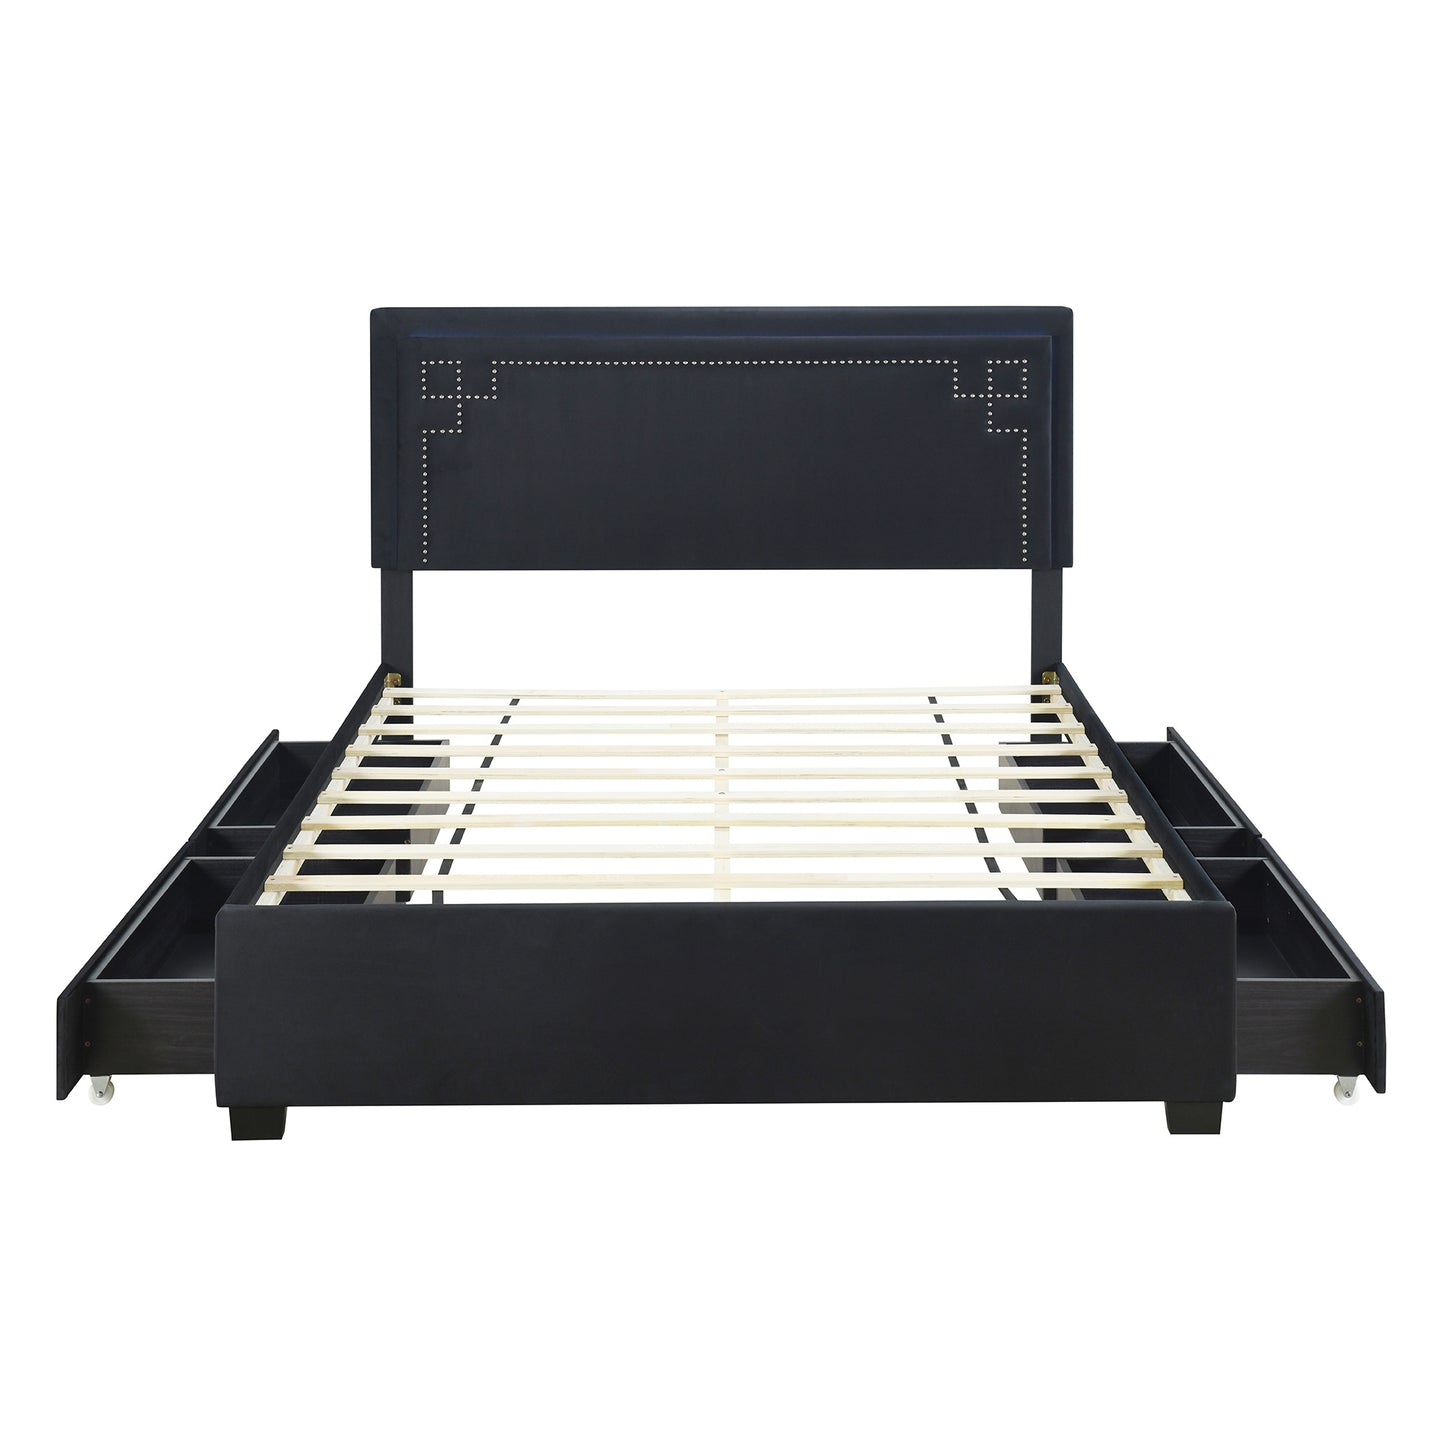 upholstered platform bed with rivet-decorated headboard, led bed frame and 4 drawers, black